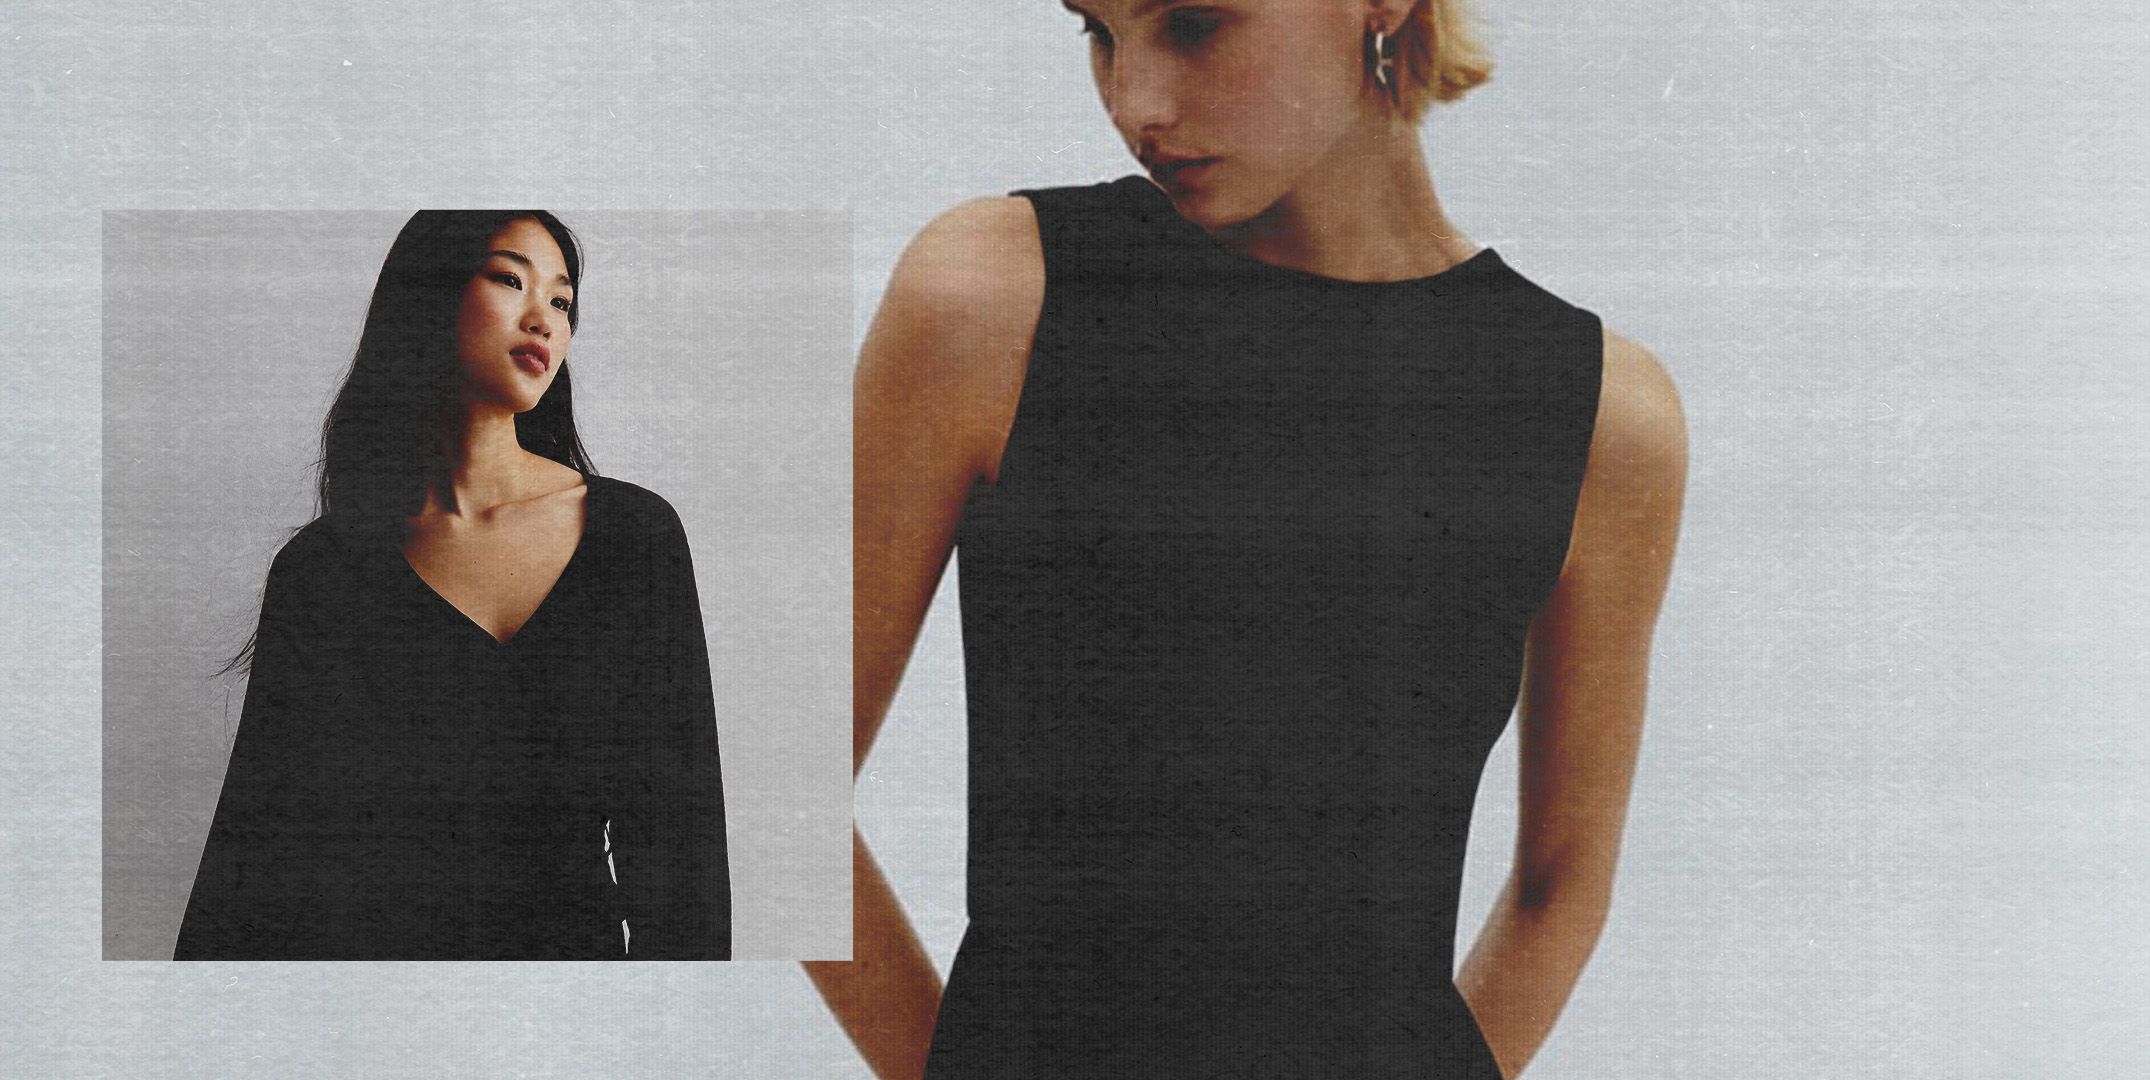 ASOS DESIGN asymmetric cut out mesh midi dress in black